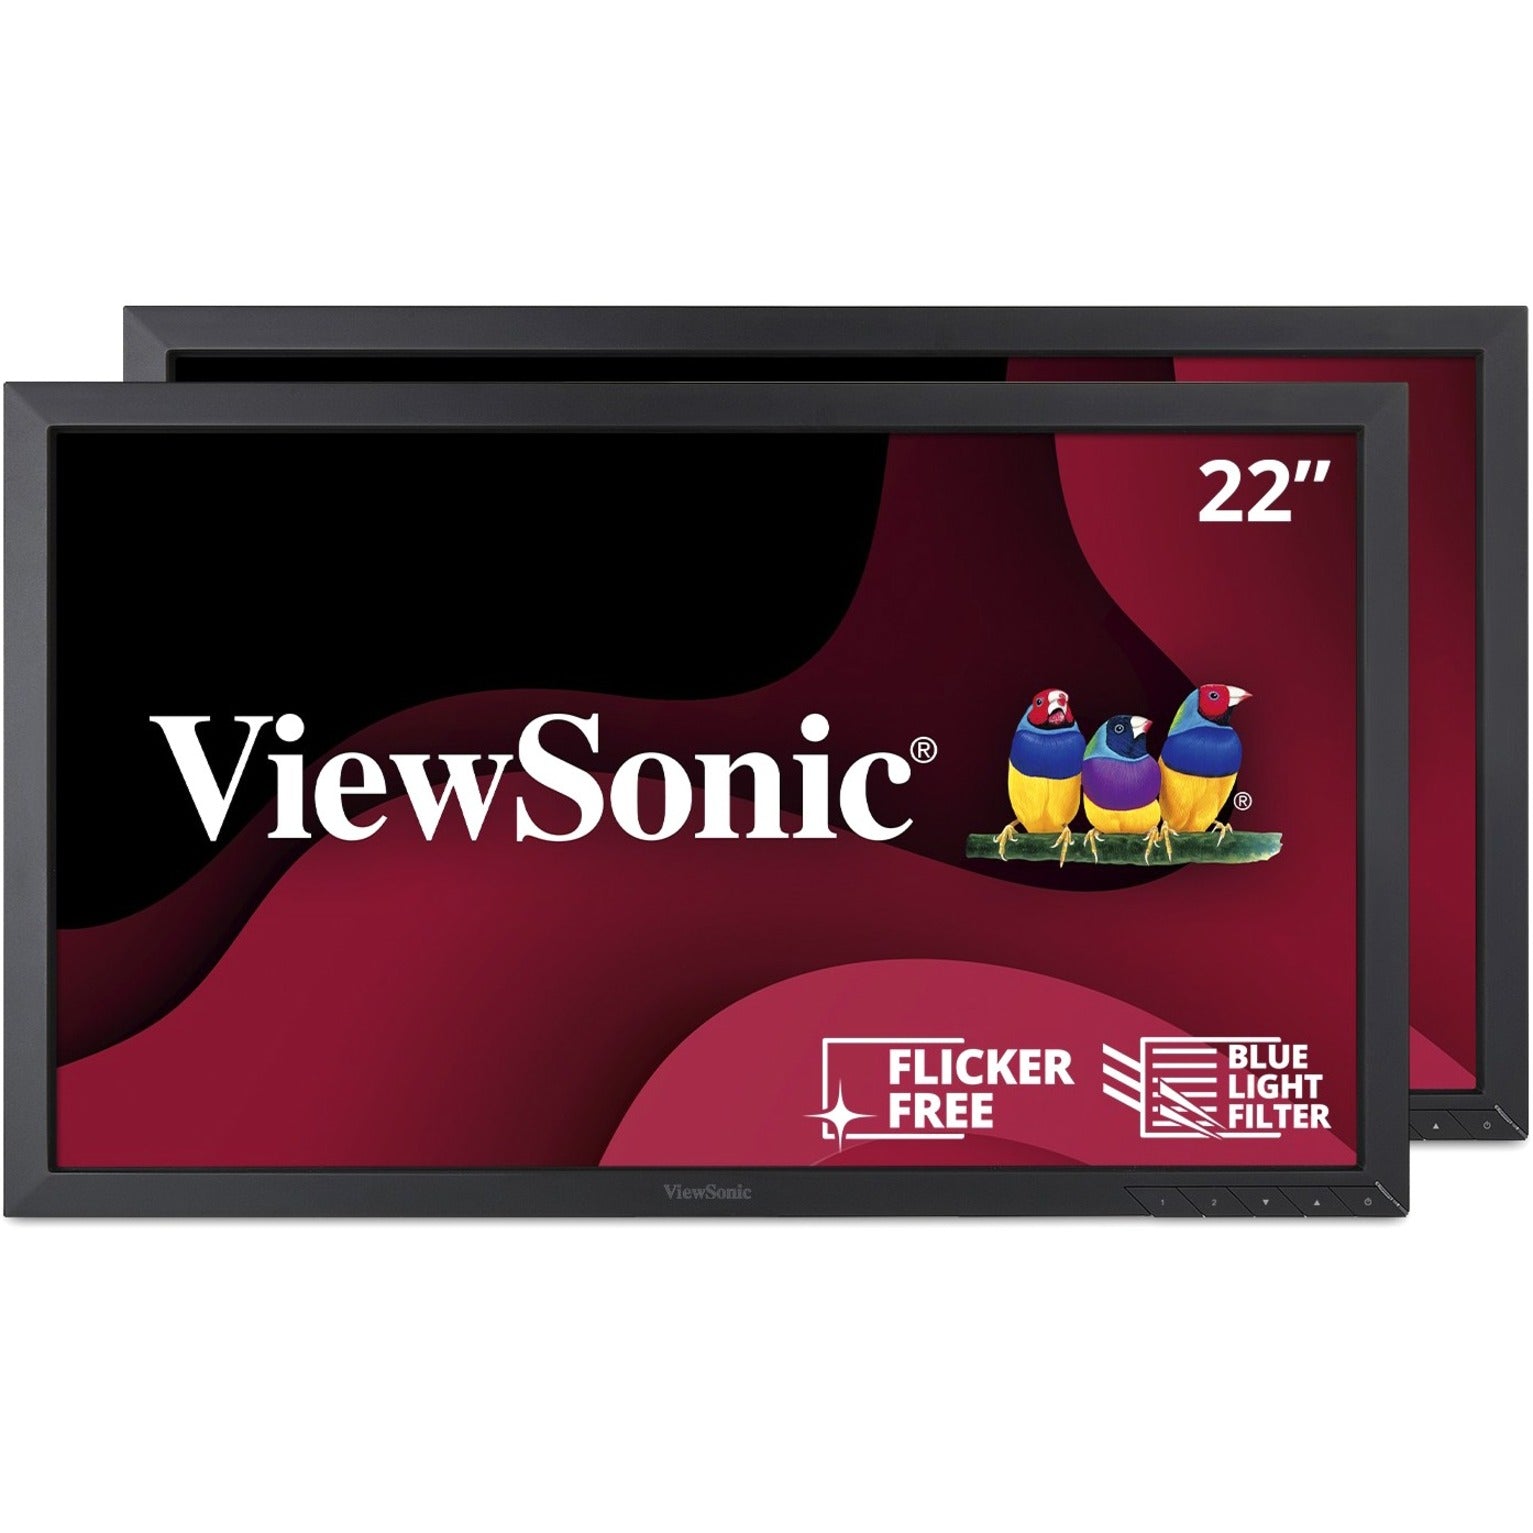 ViewSonic VA2252SM_H2 Value Dual Head LCD Monitor, Full HD, 22, 3000:1 Contrast Ratio